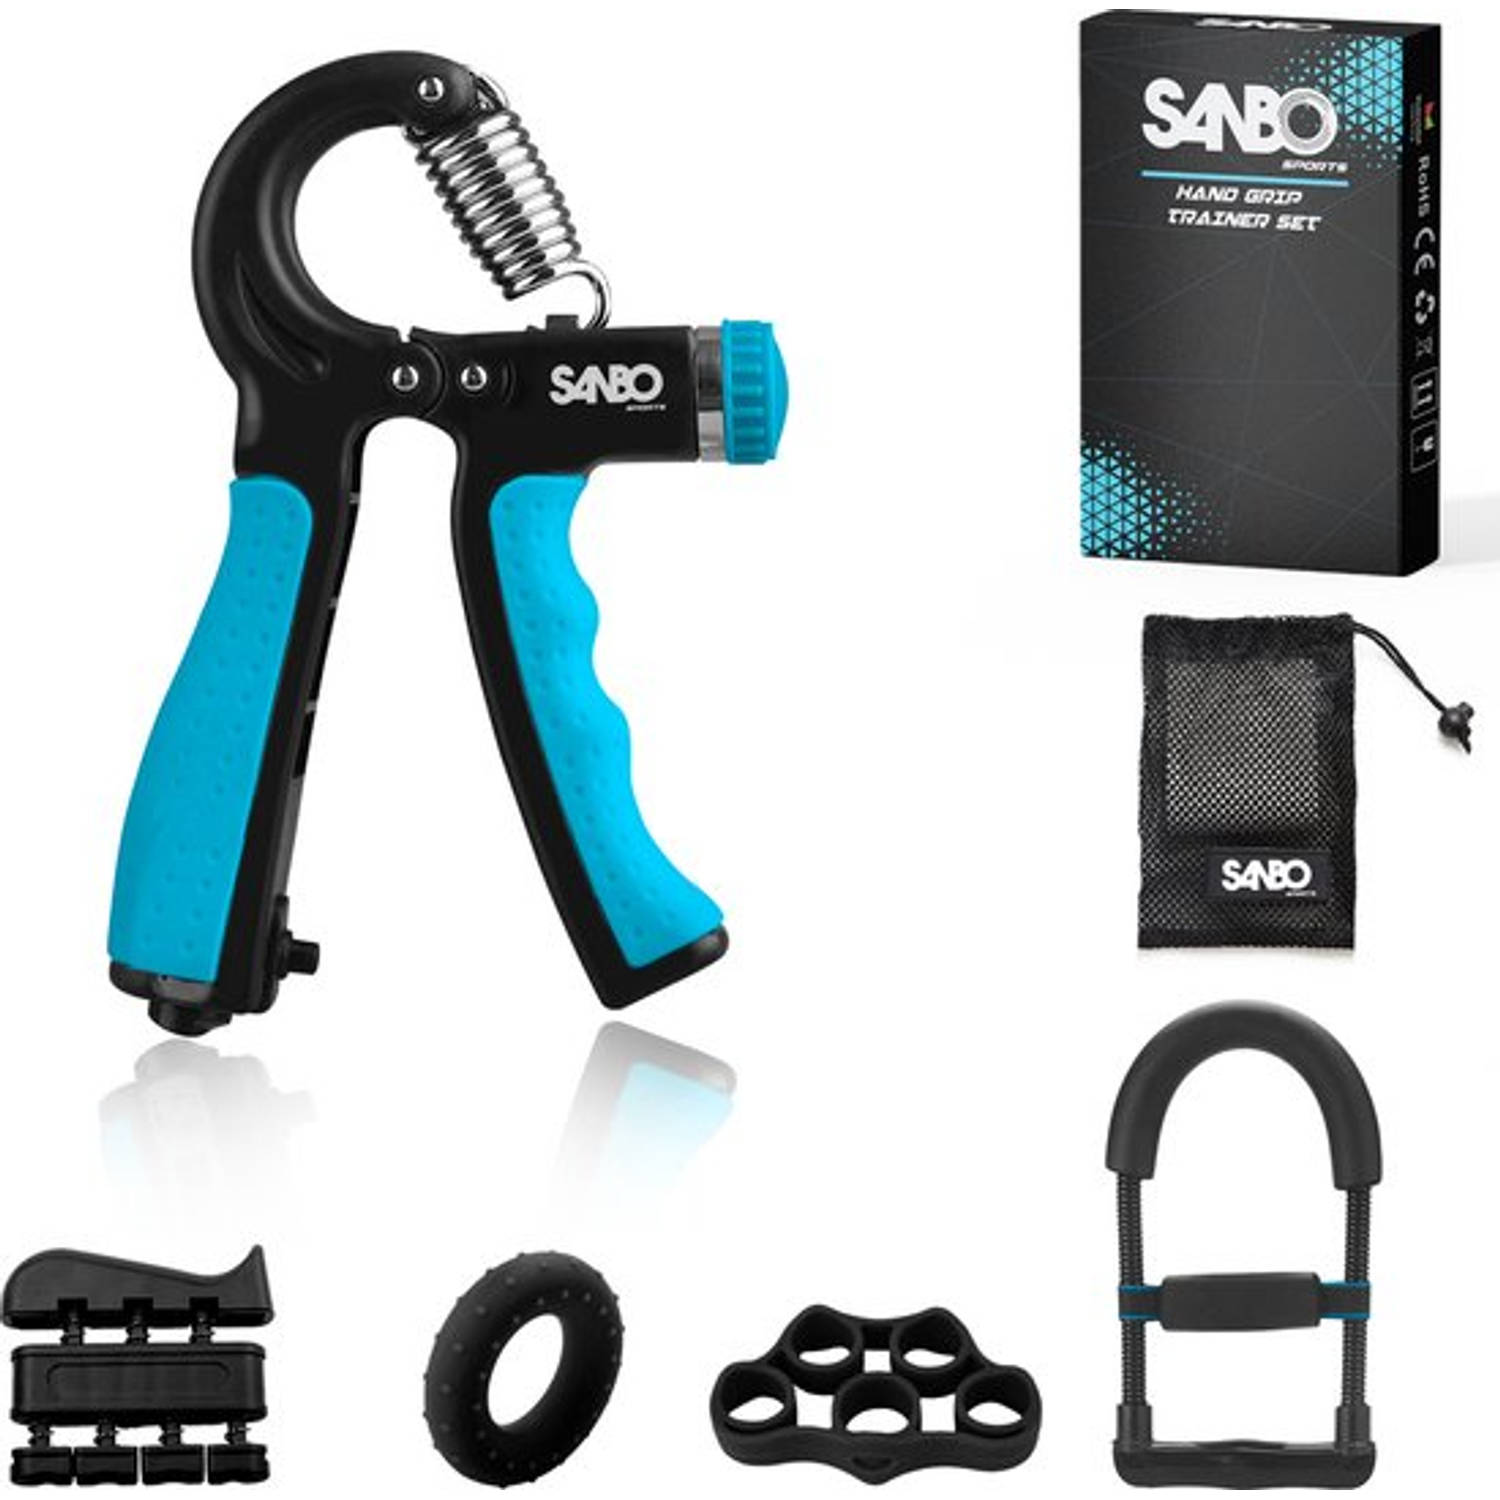 Sanbo Handtrainer Set